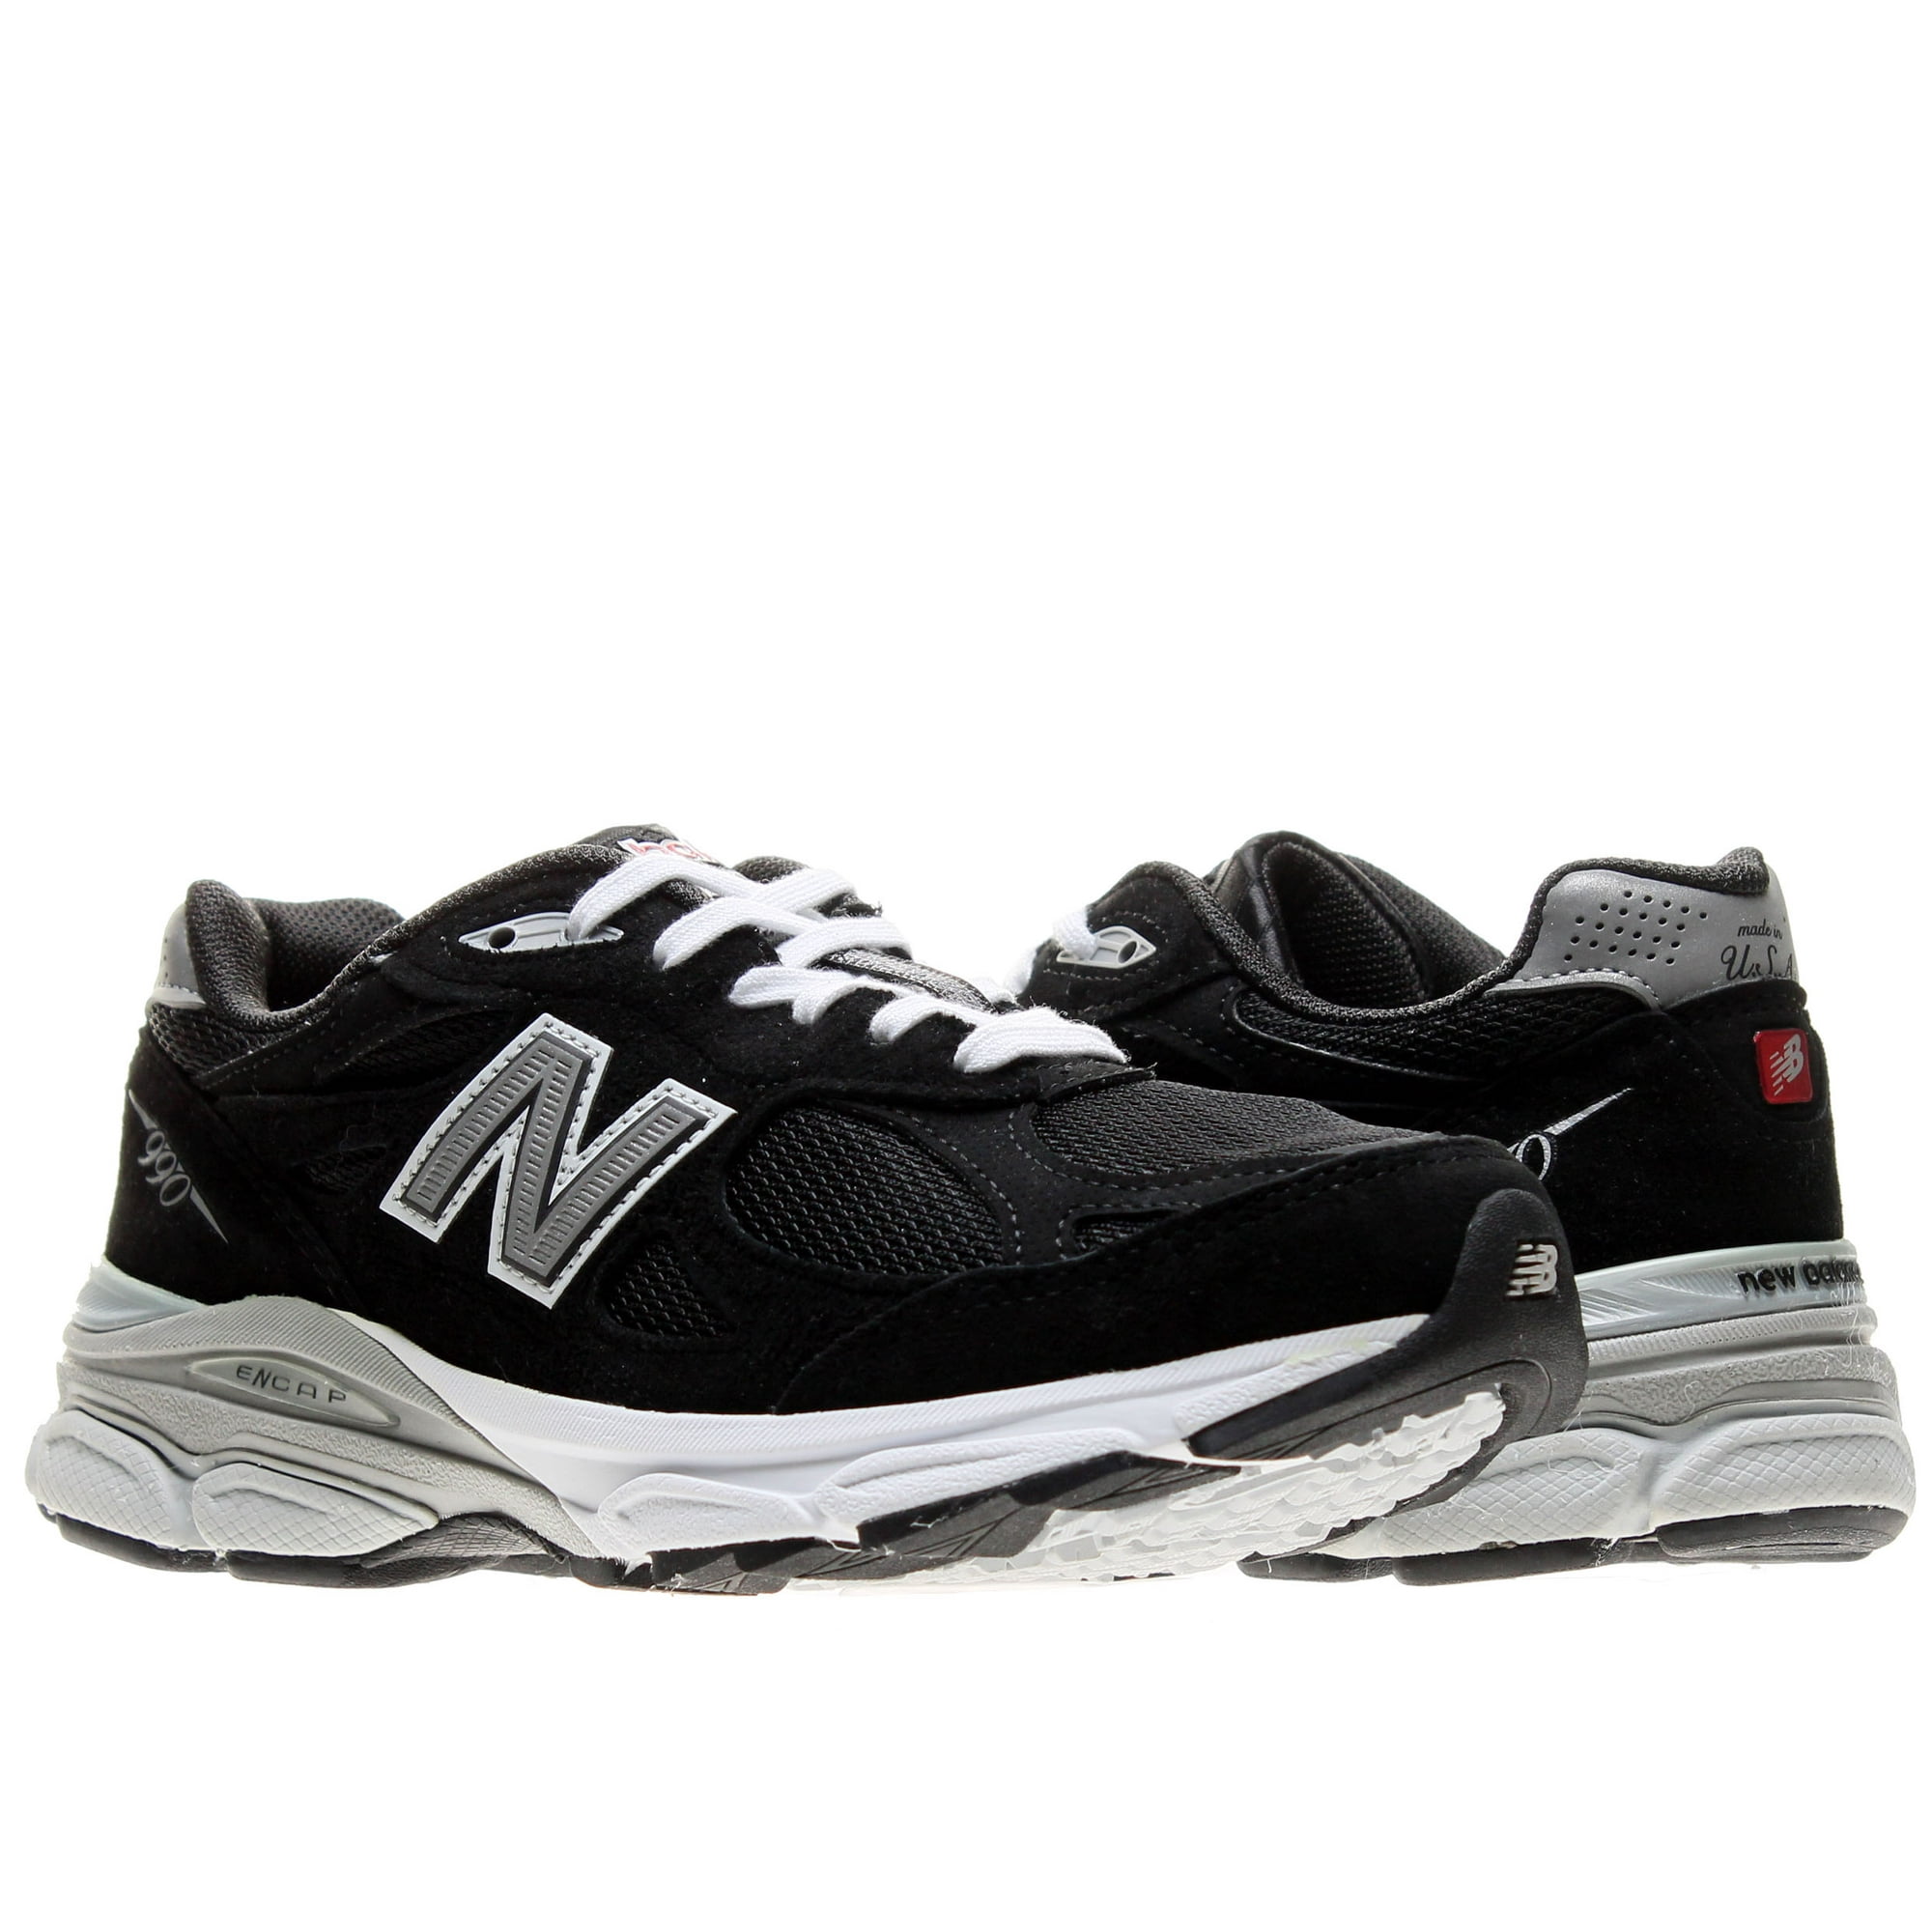 New Balance W990 Black Women's Running Shoes W990BK3 Size 6EE